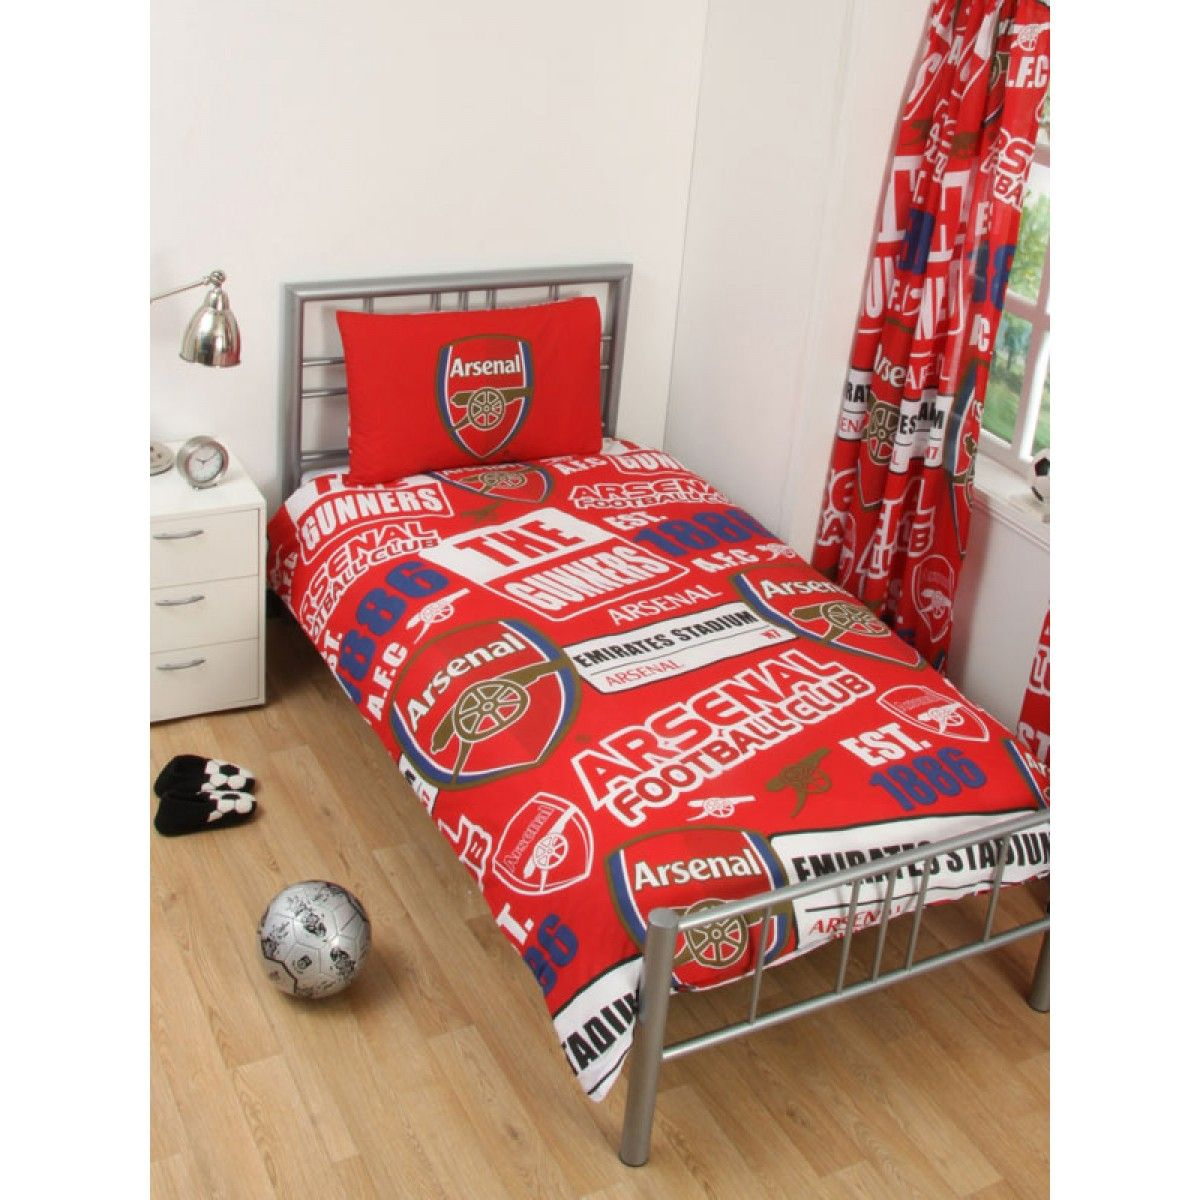 Arsenal Fc 50 Ultimate Bedroom Makeover Kit Duvet Cover Ars148 inside proportions 1200 X 1200